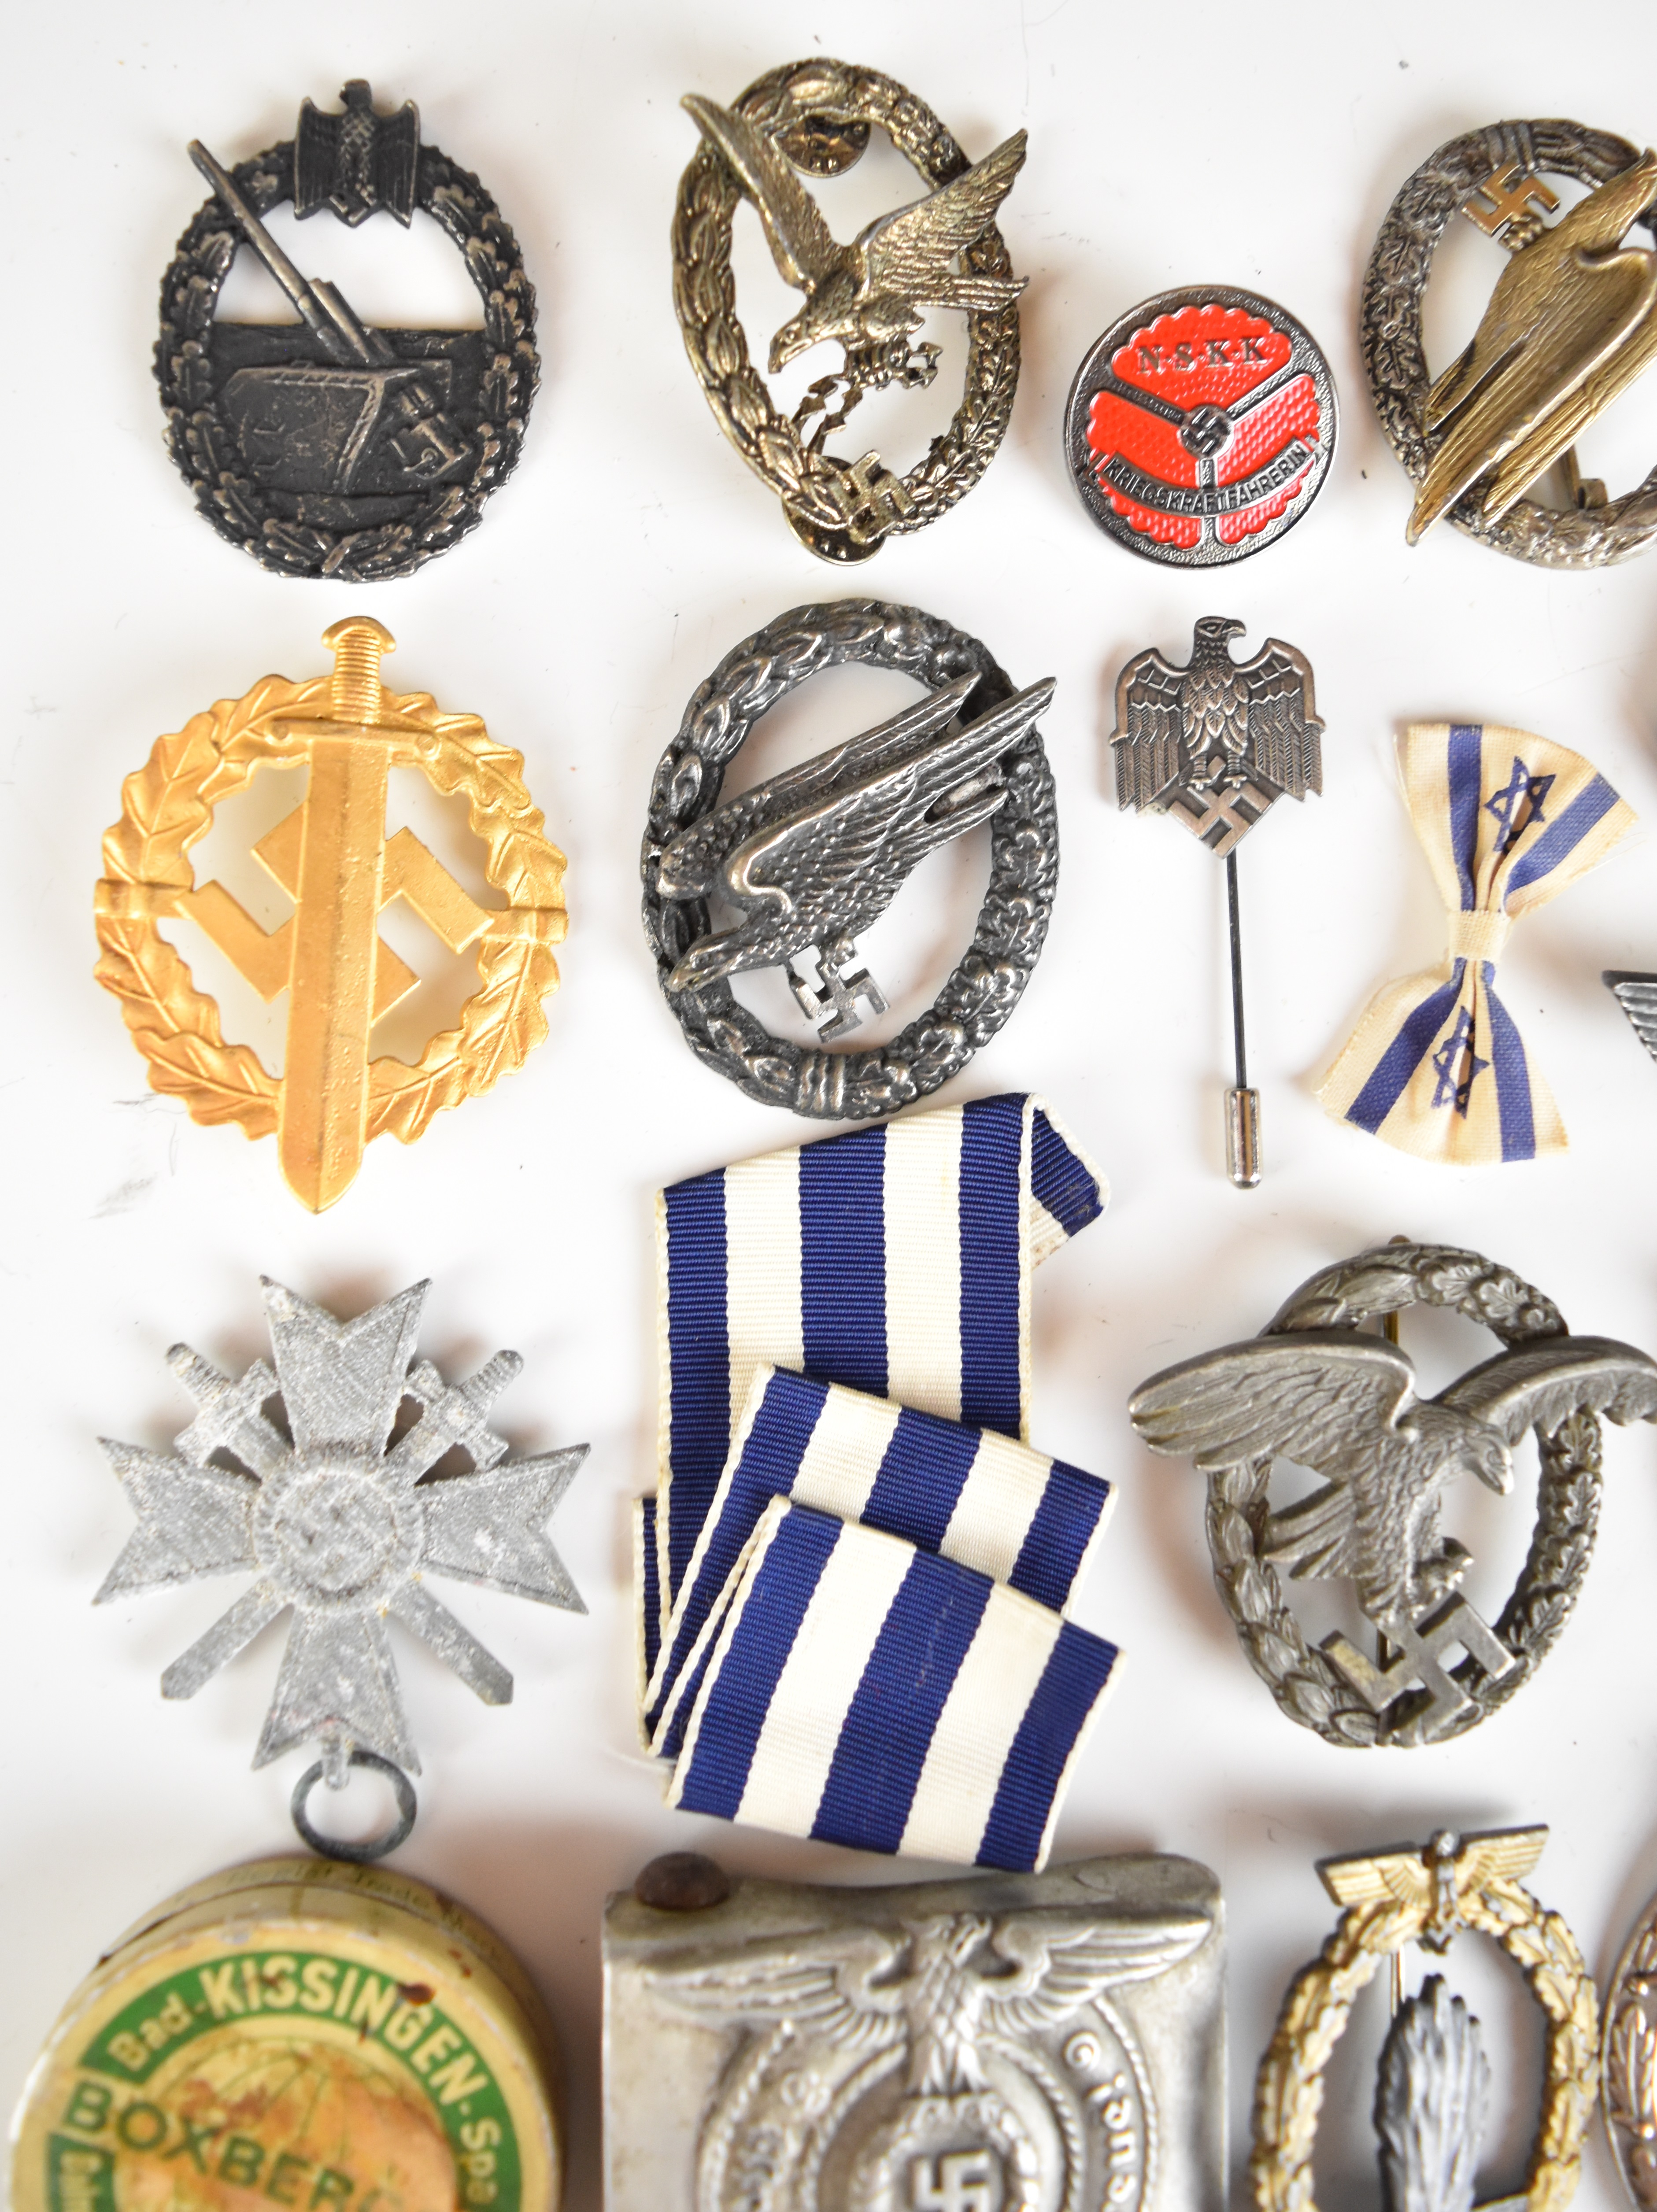 Replica German WW2 Nazi Third Reich badges, insignia and medals including High Seas Fleet, Artillery - Image 5 of 16